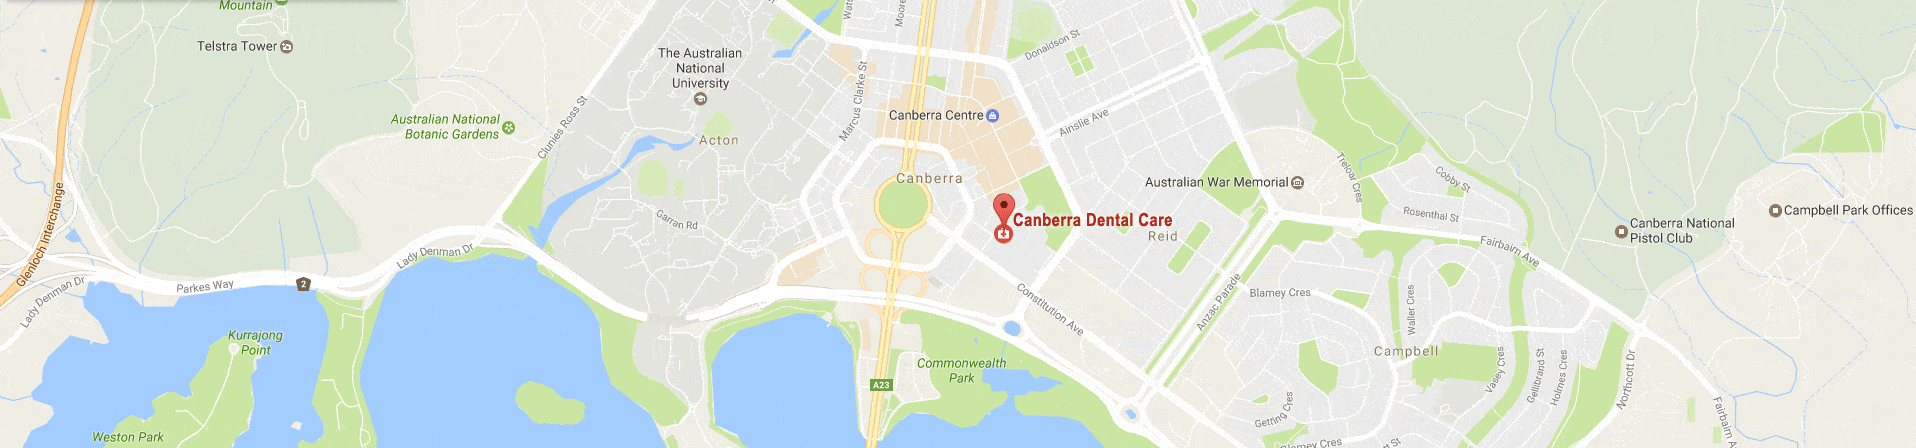 Canberra Dental Care location